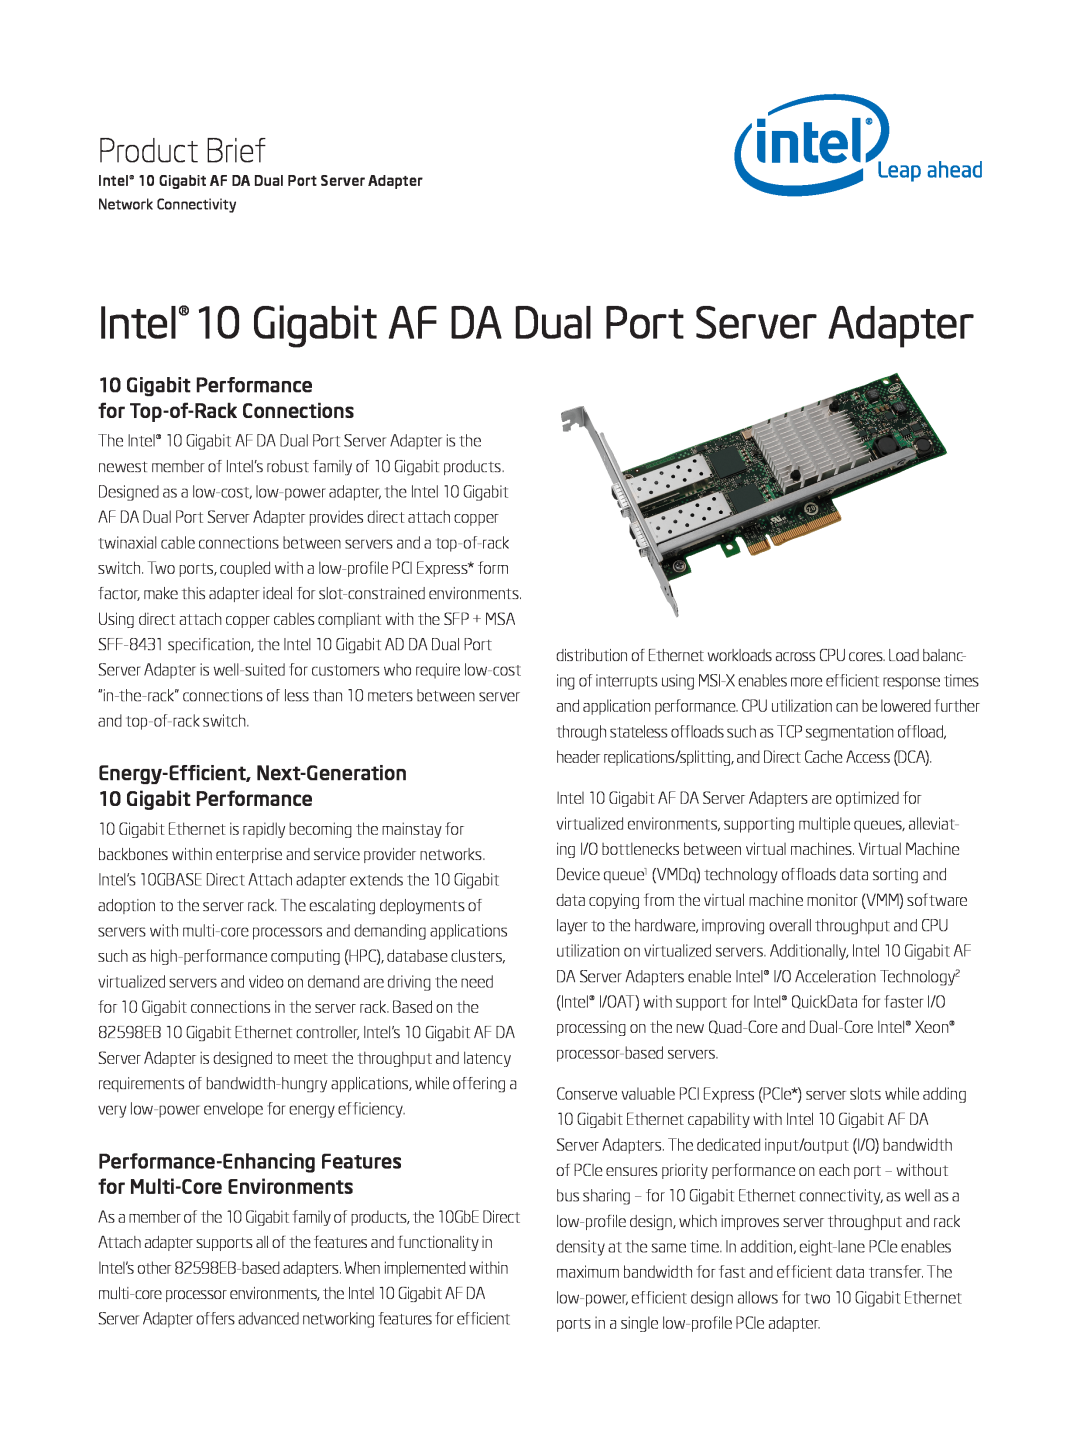 Intel manual Intel 10 Gigabit AF DA Dual Port Server Adapter, Product Brief 